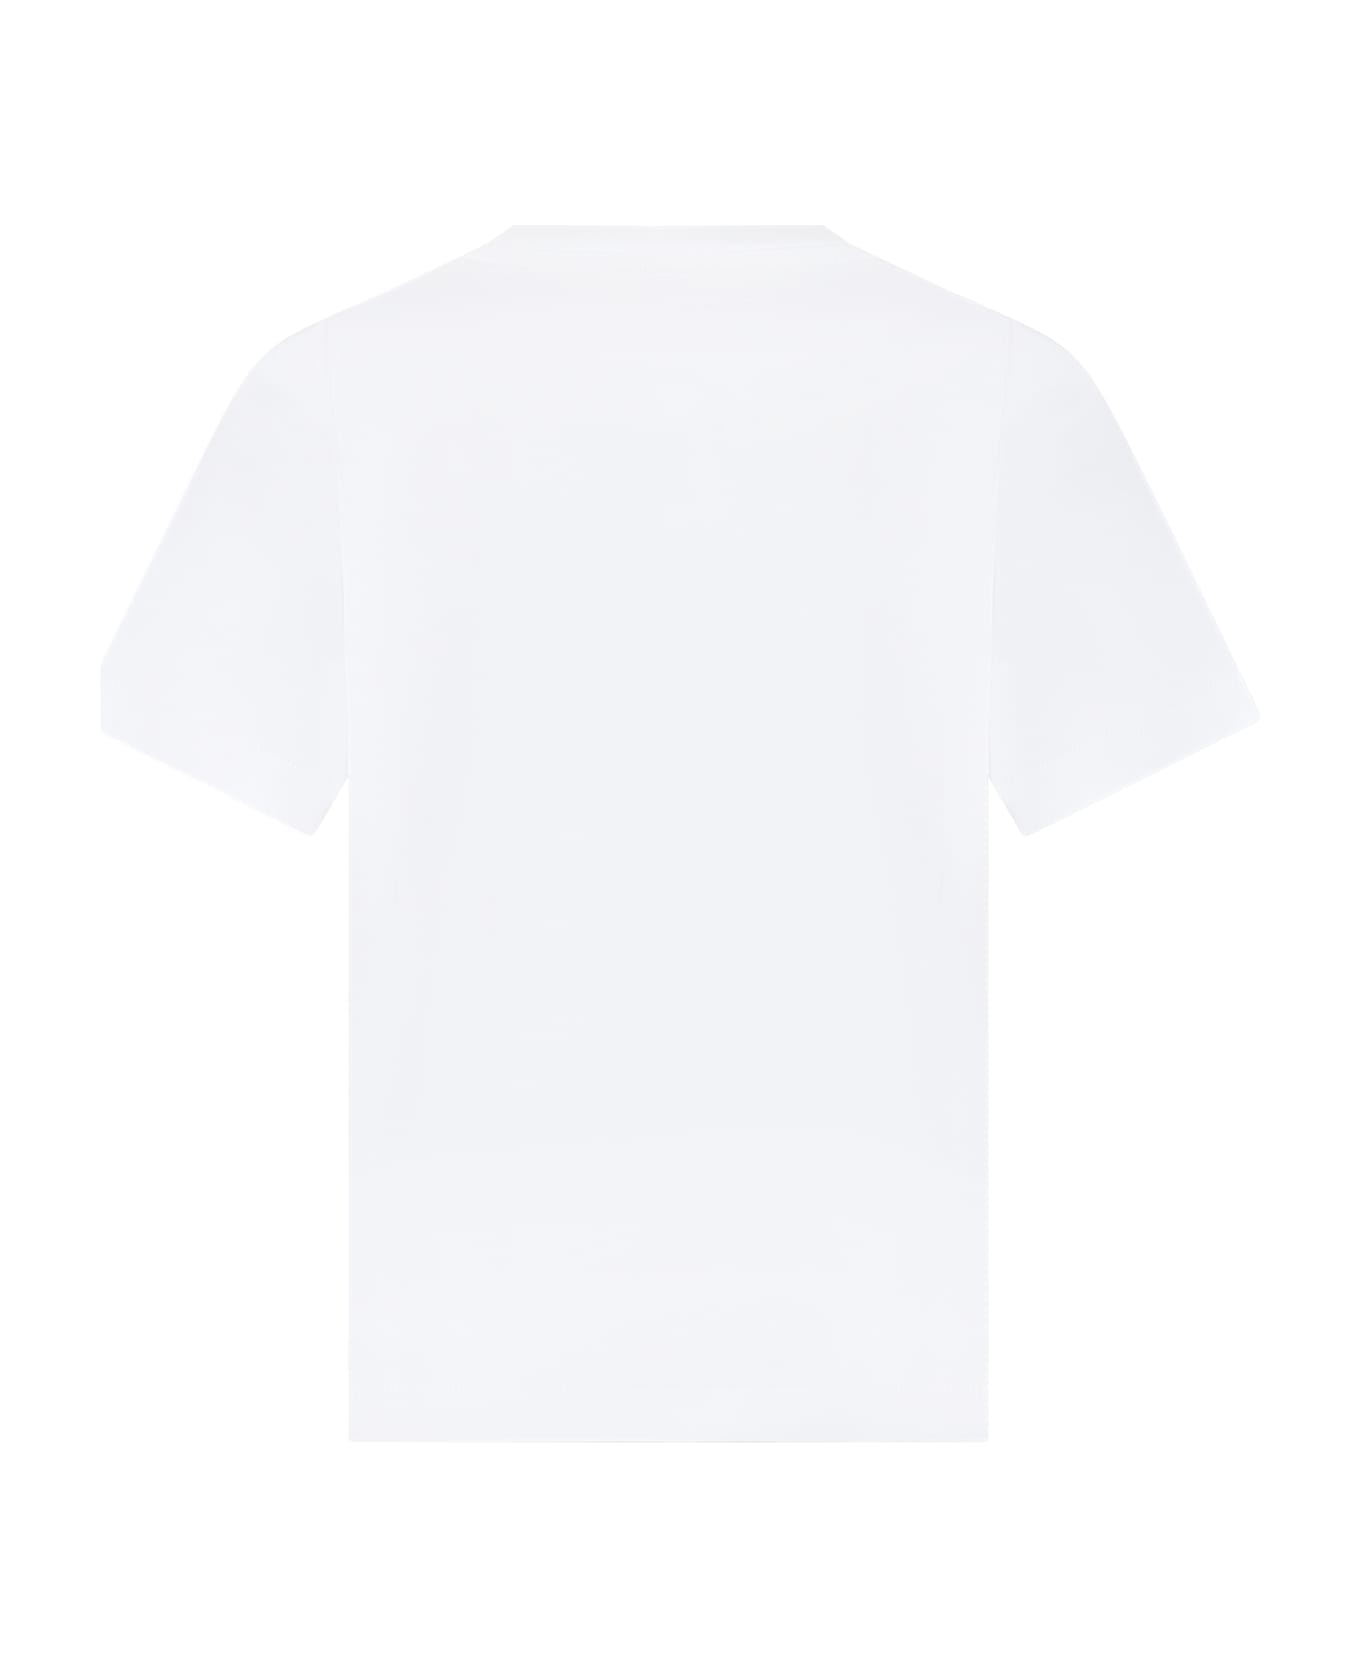 Stella McCartney Kids White T-shirt For Boy With Toast Print - White